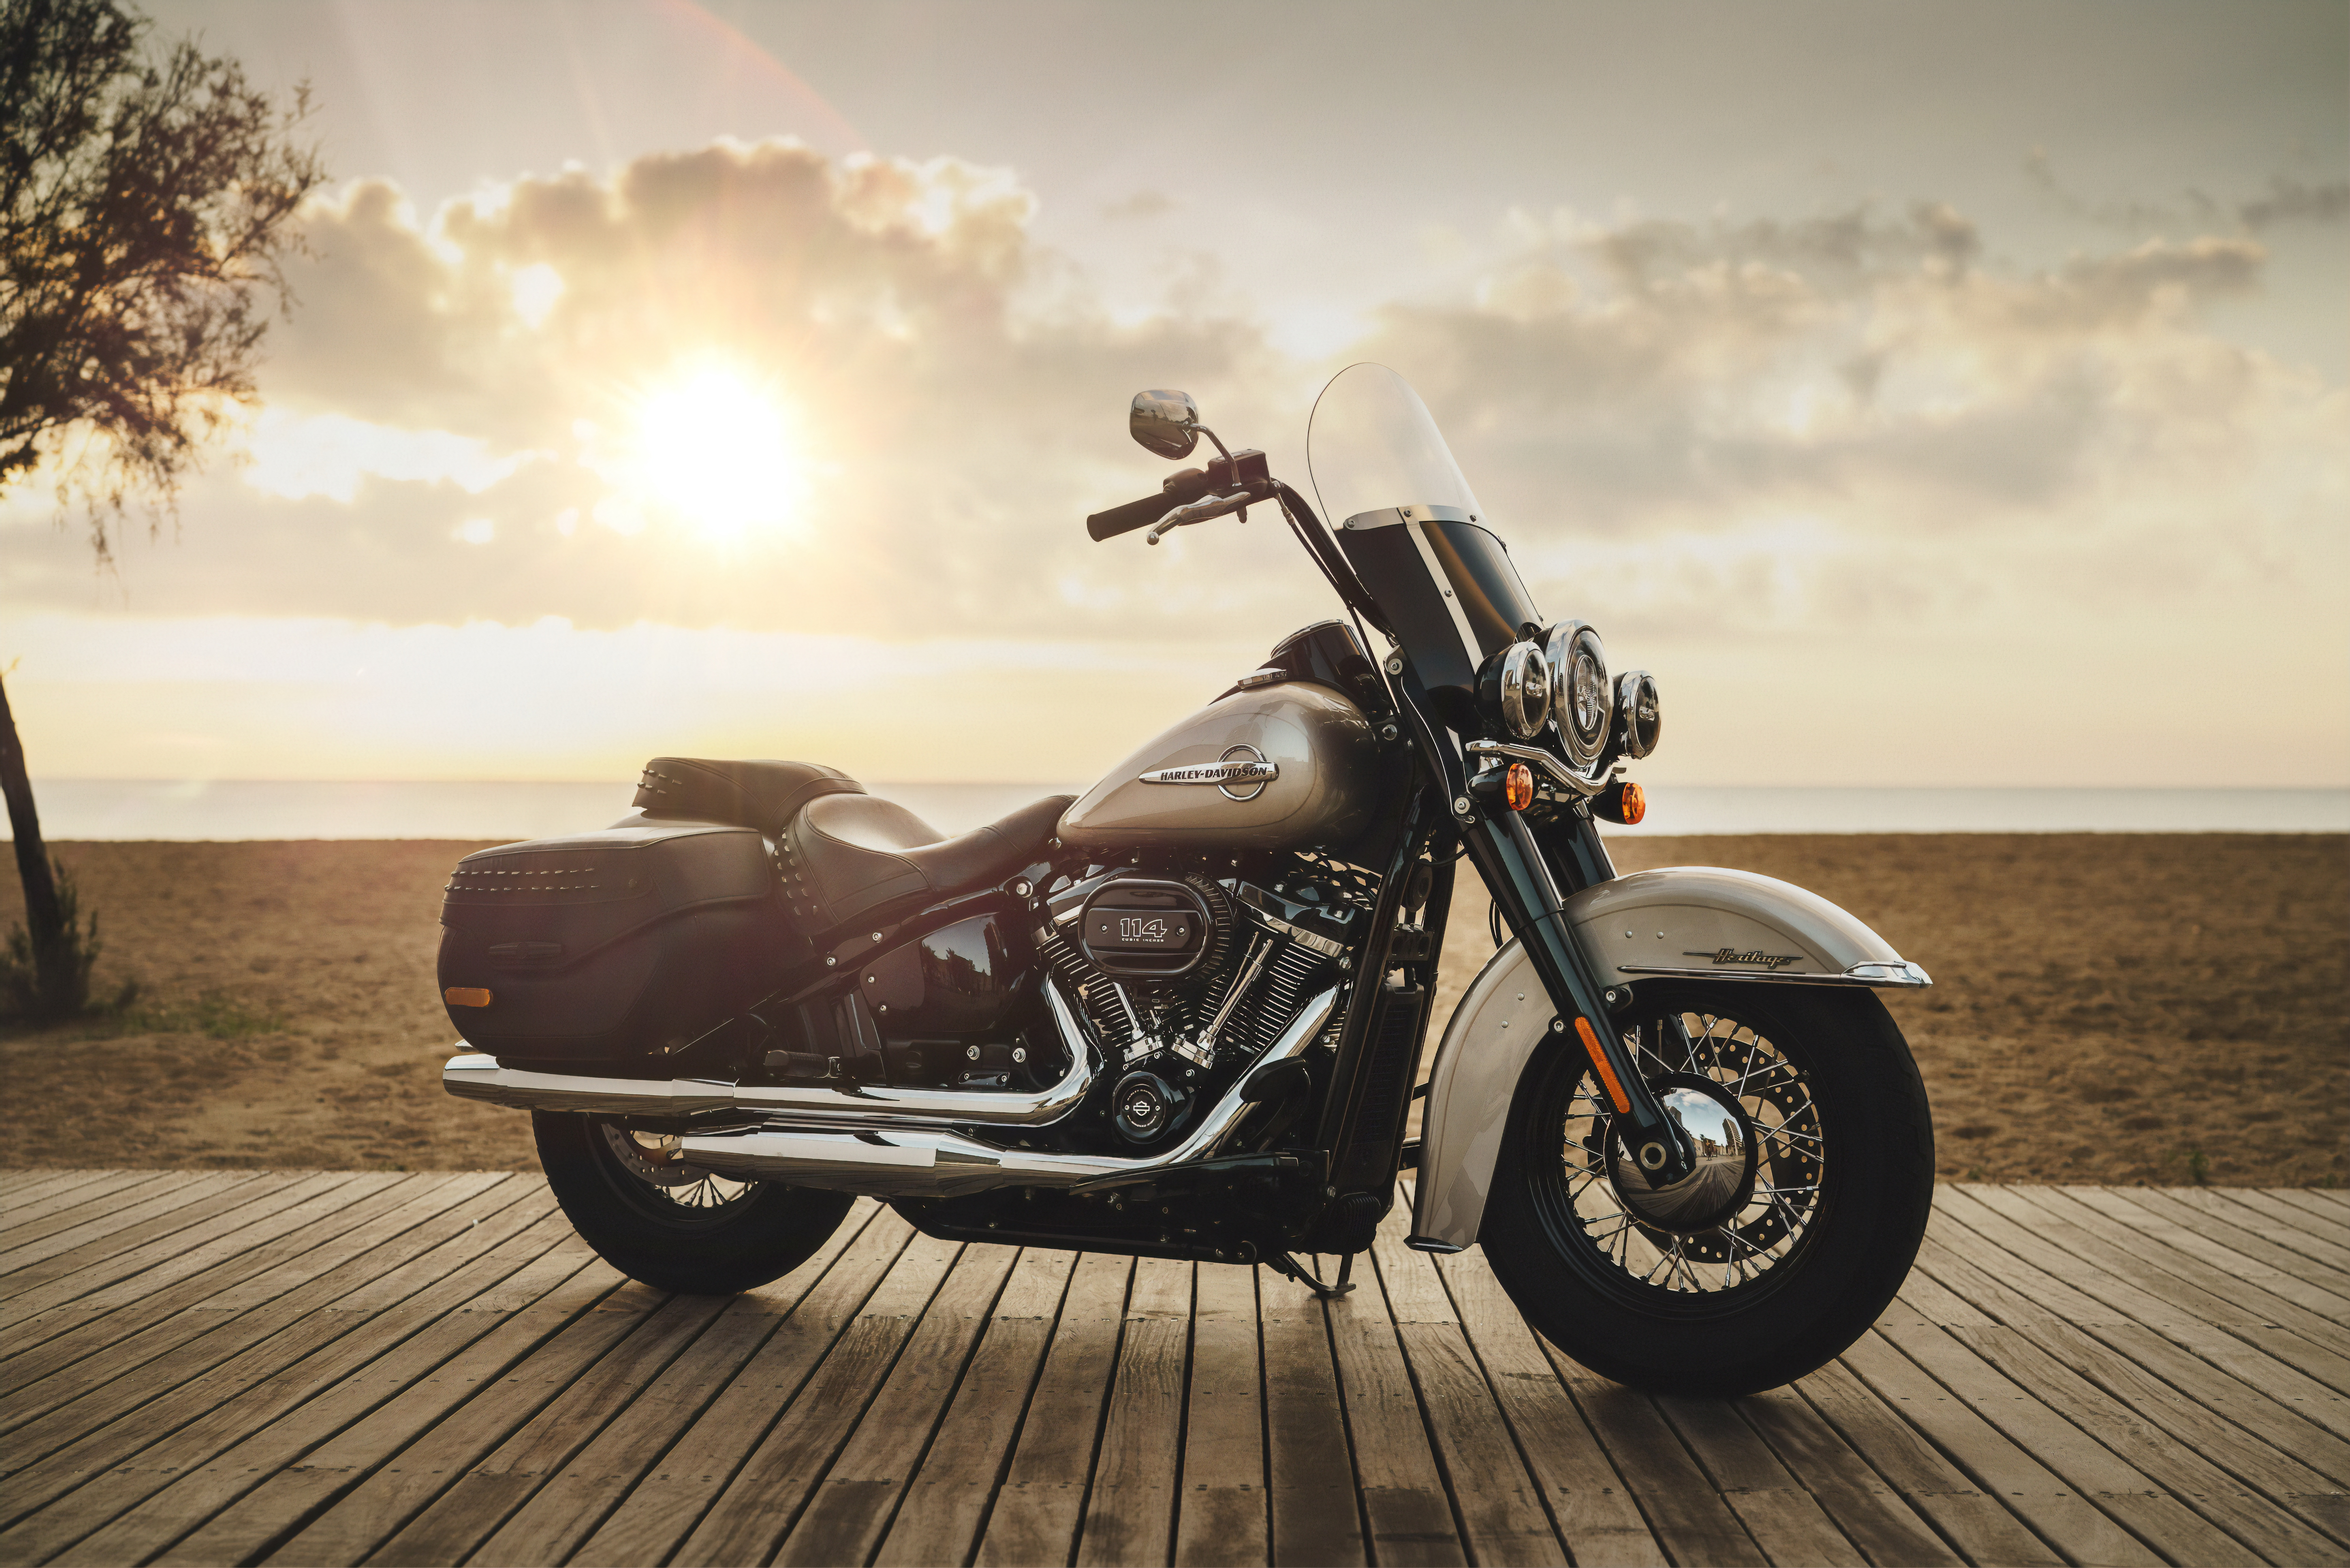 harley davidson, motorcycles, horizon, shore, bank, side view, motorcycle, bike High Definition image